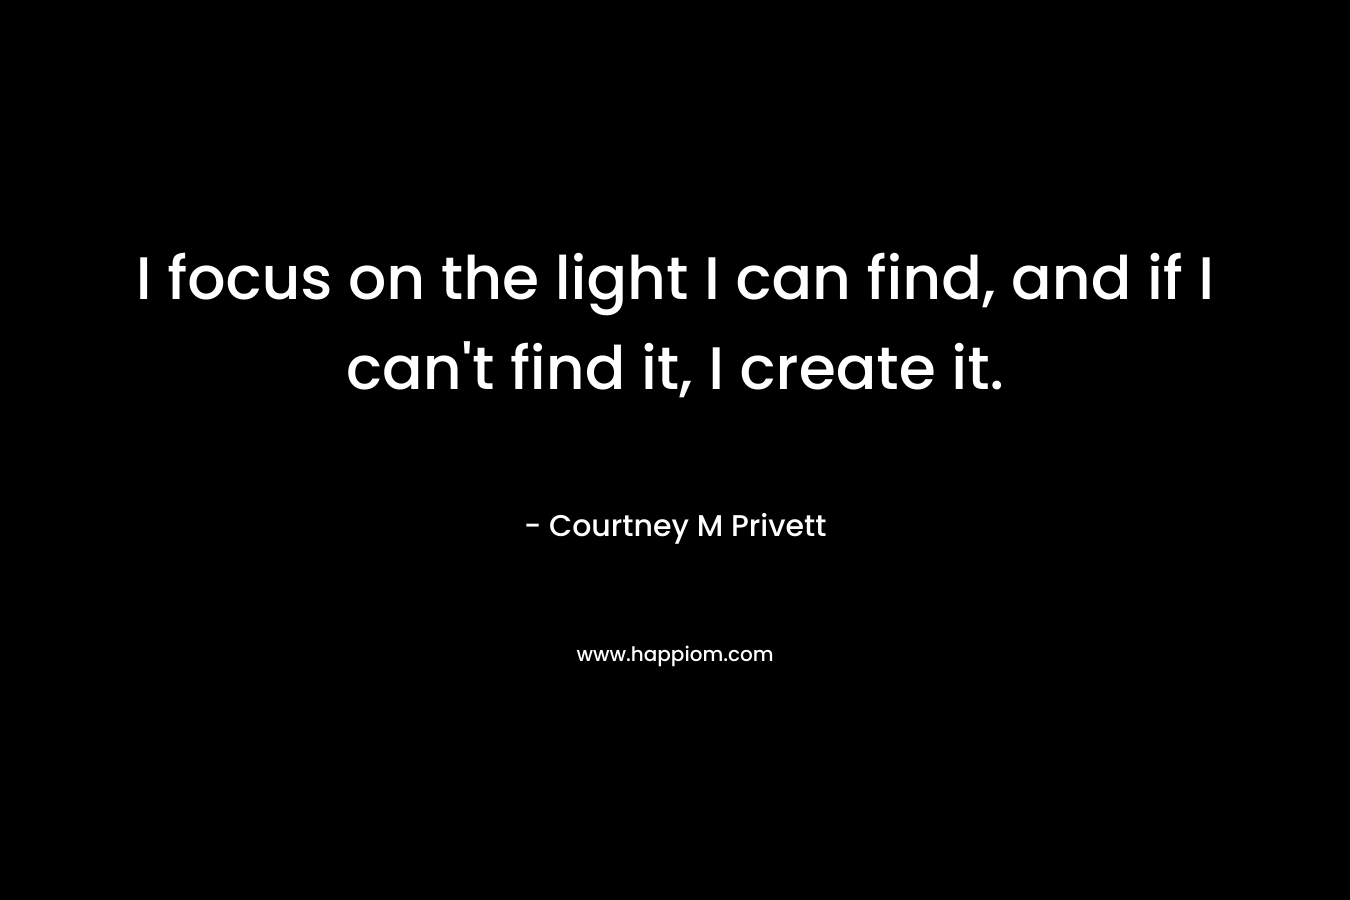 I focus on the light I can find, and if I can't find it, I create it.